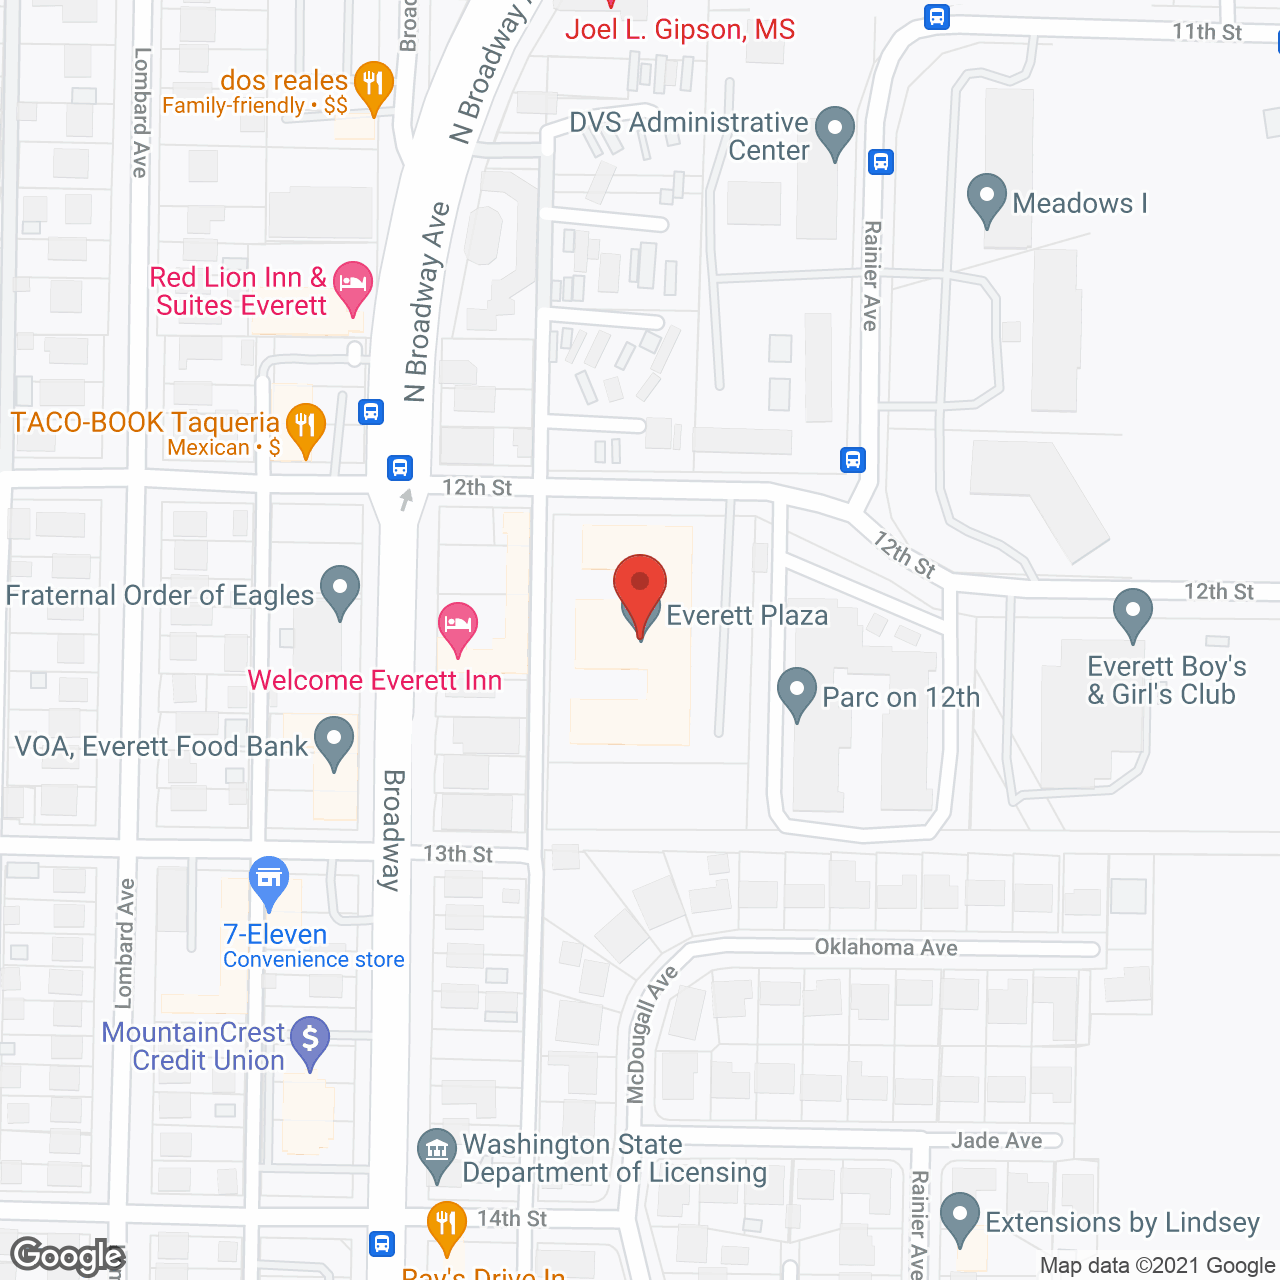 Everett Plaza in google map